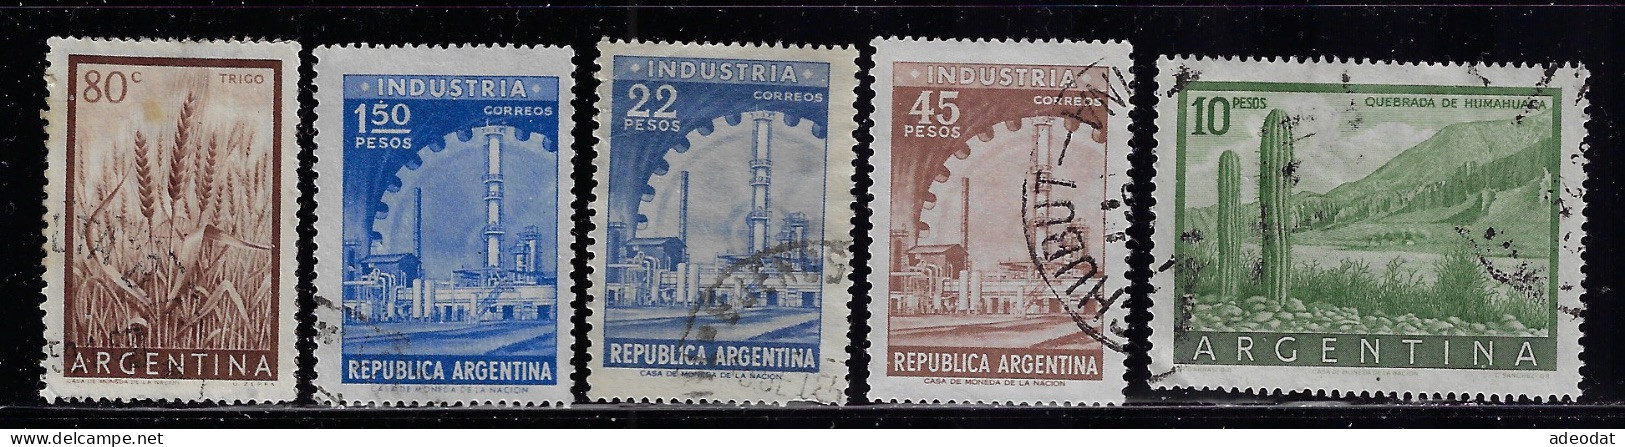 ARGENTINA  1954  SCOTT #634,636,640,824,.. USED - Gebruikt